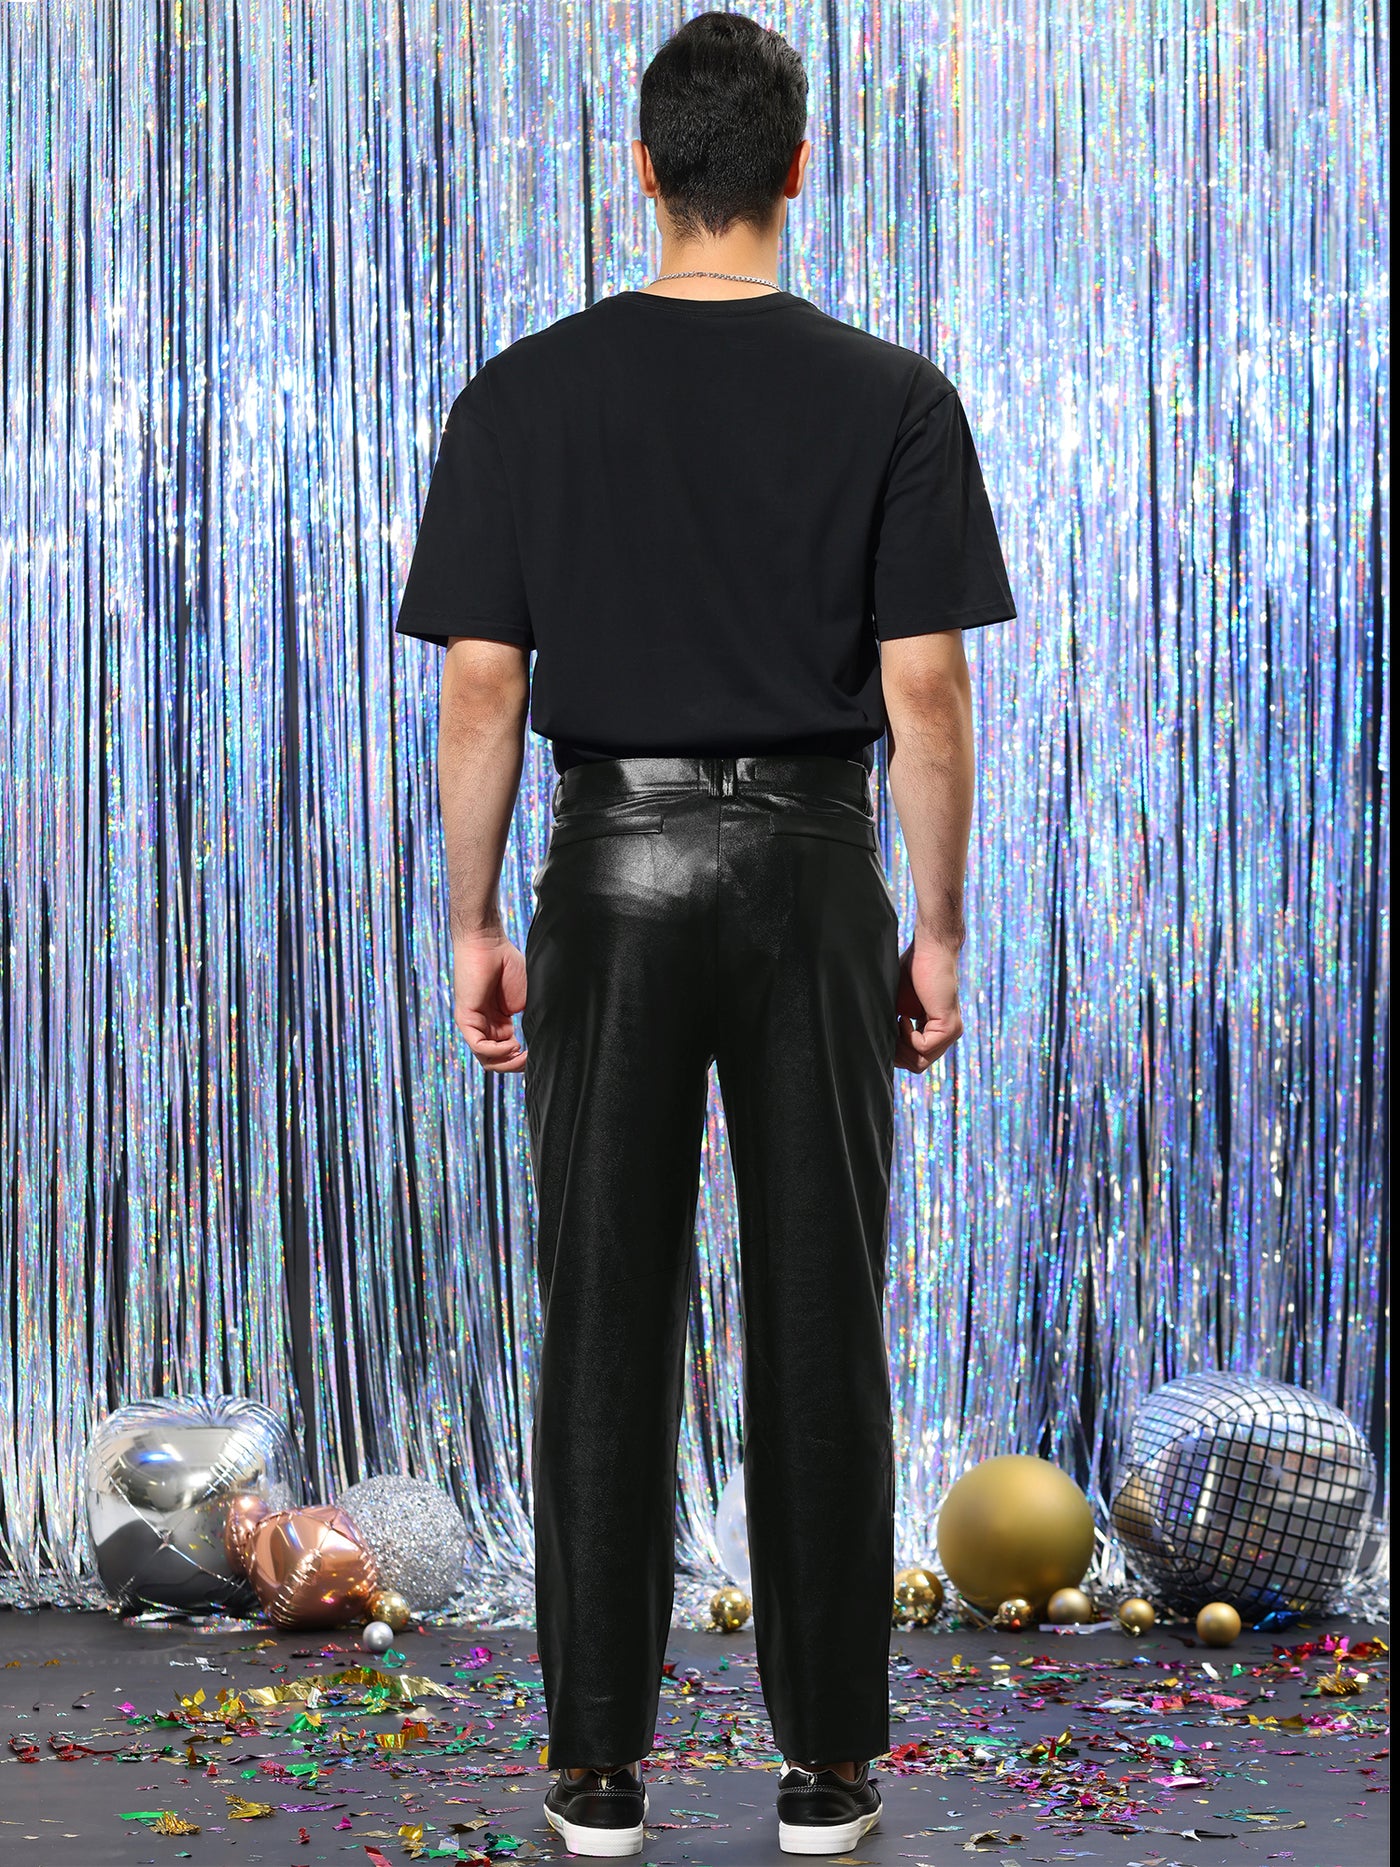 Bublédon Men's Metallic Disco Straight Leg Shiny Party Club Suit Pants